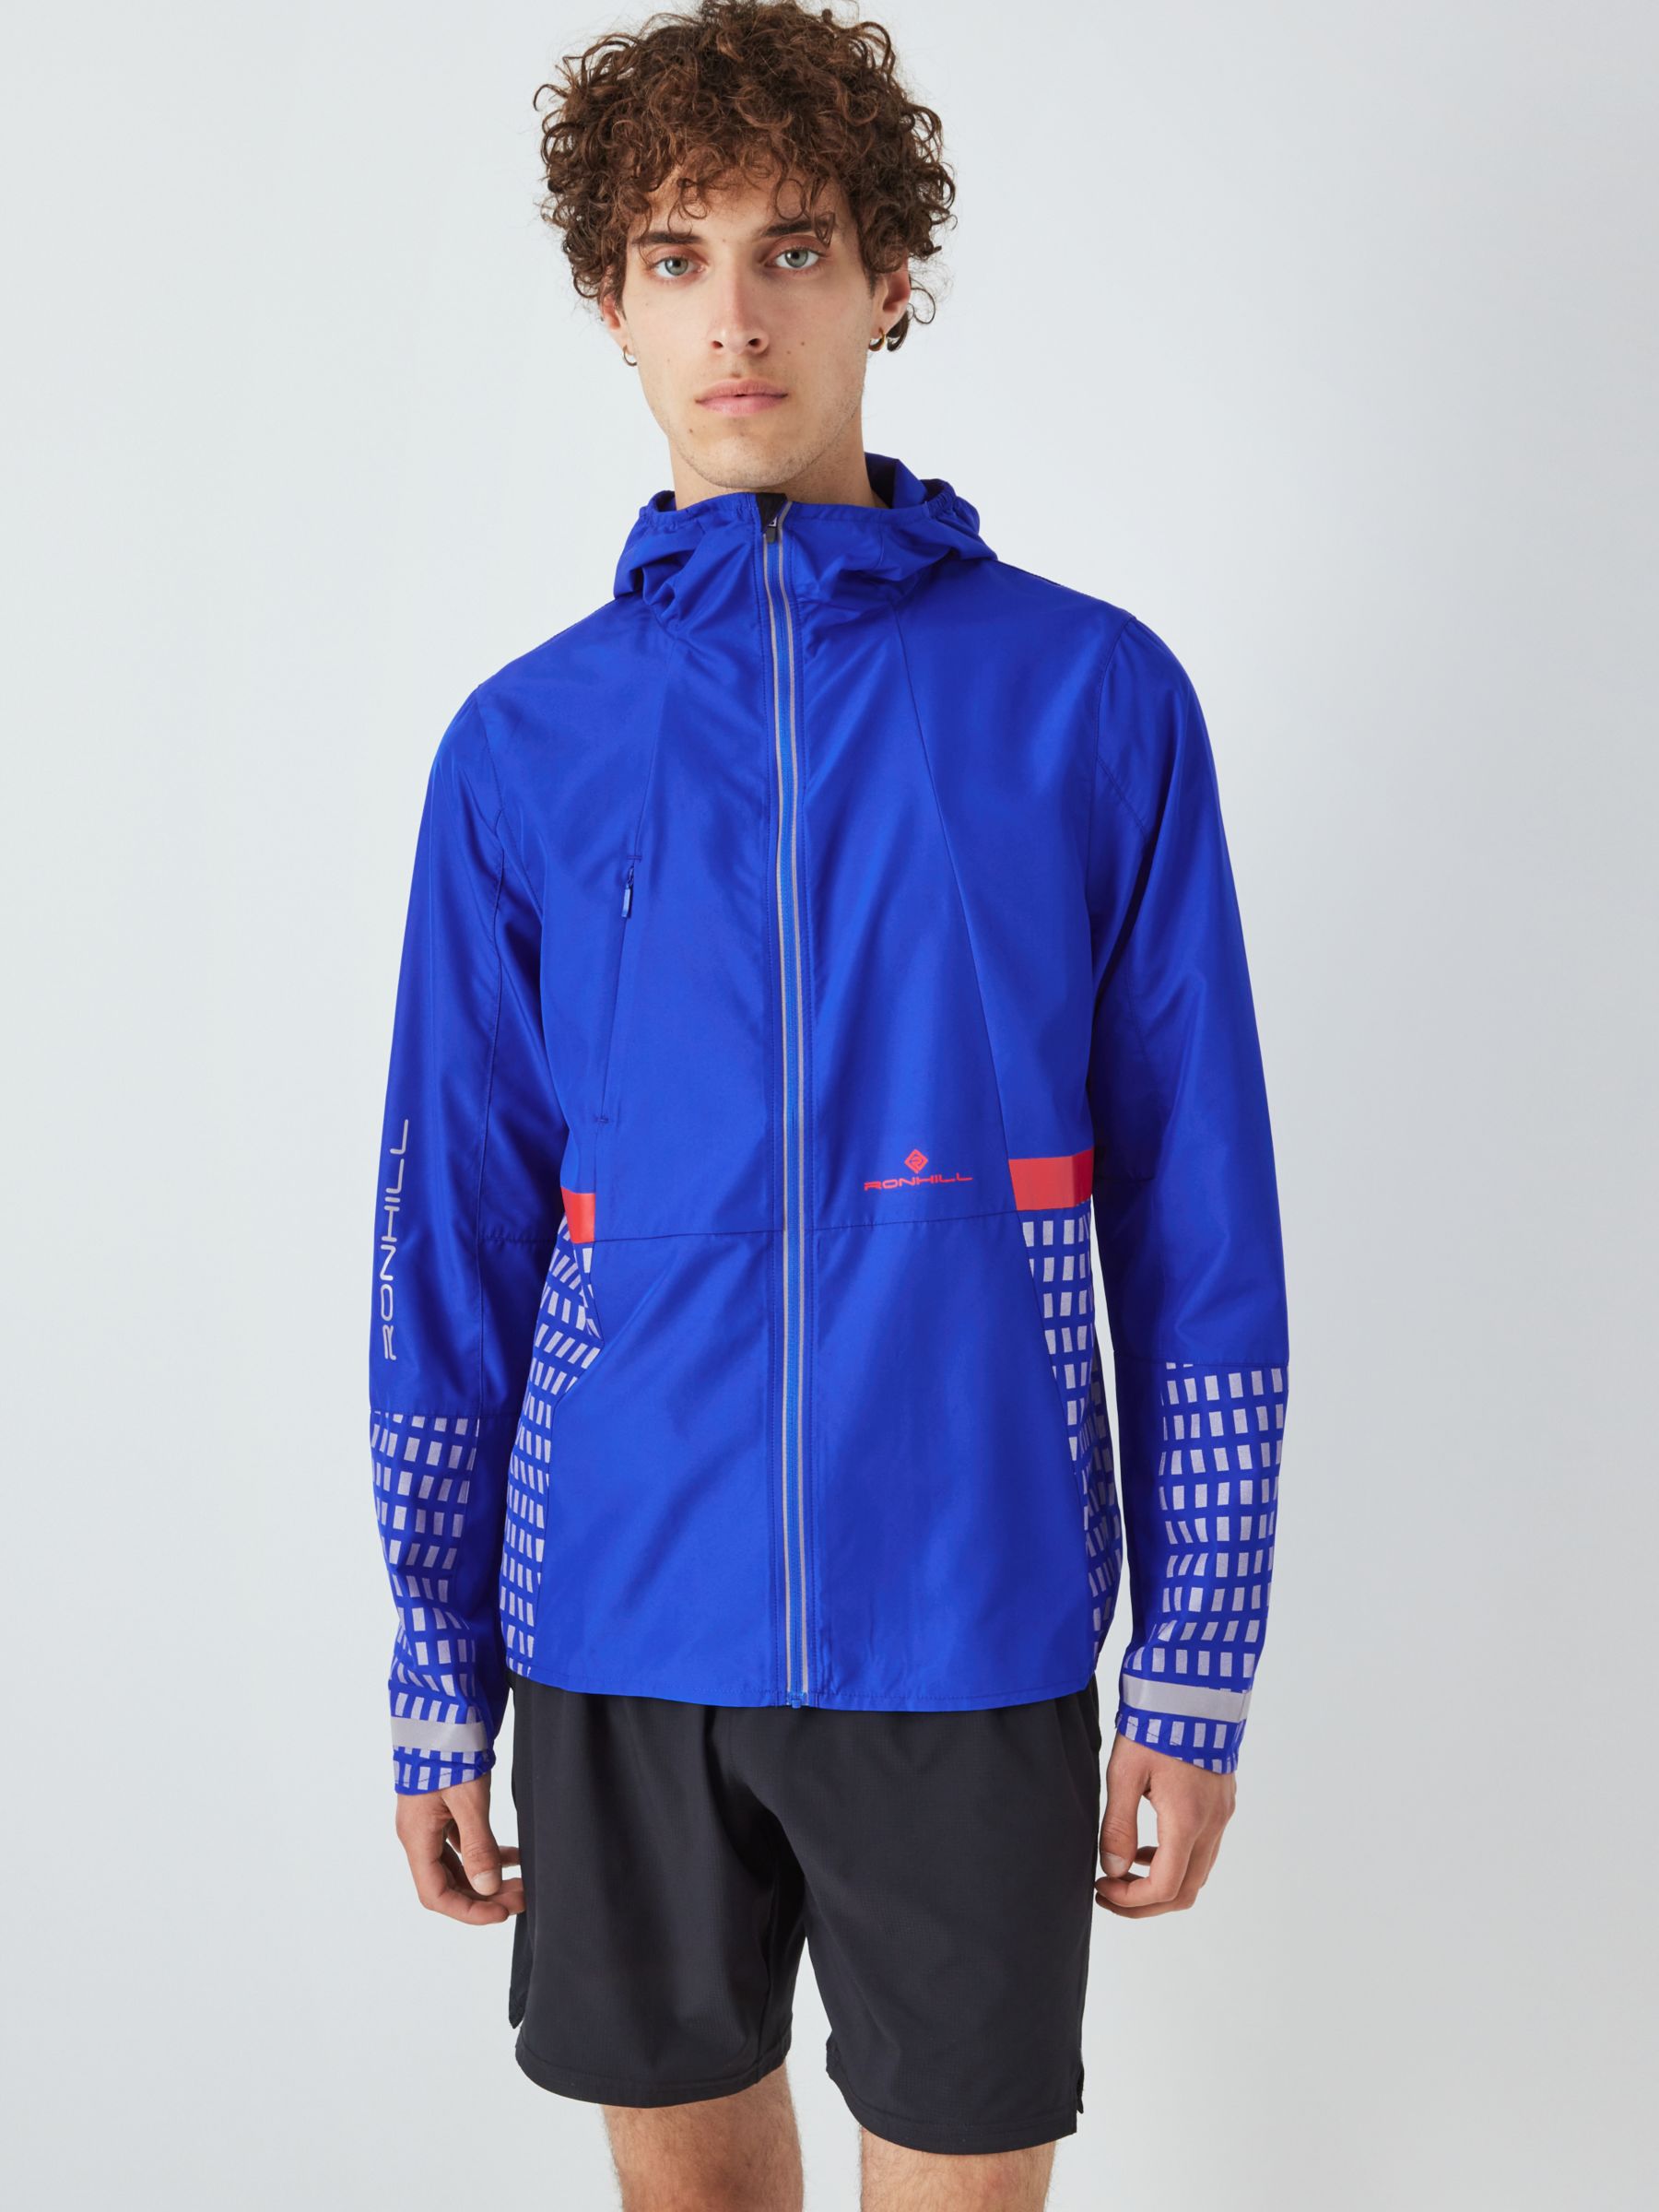 Ronhill Men's Reflective Running Jacket, Cobalt, S